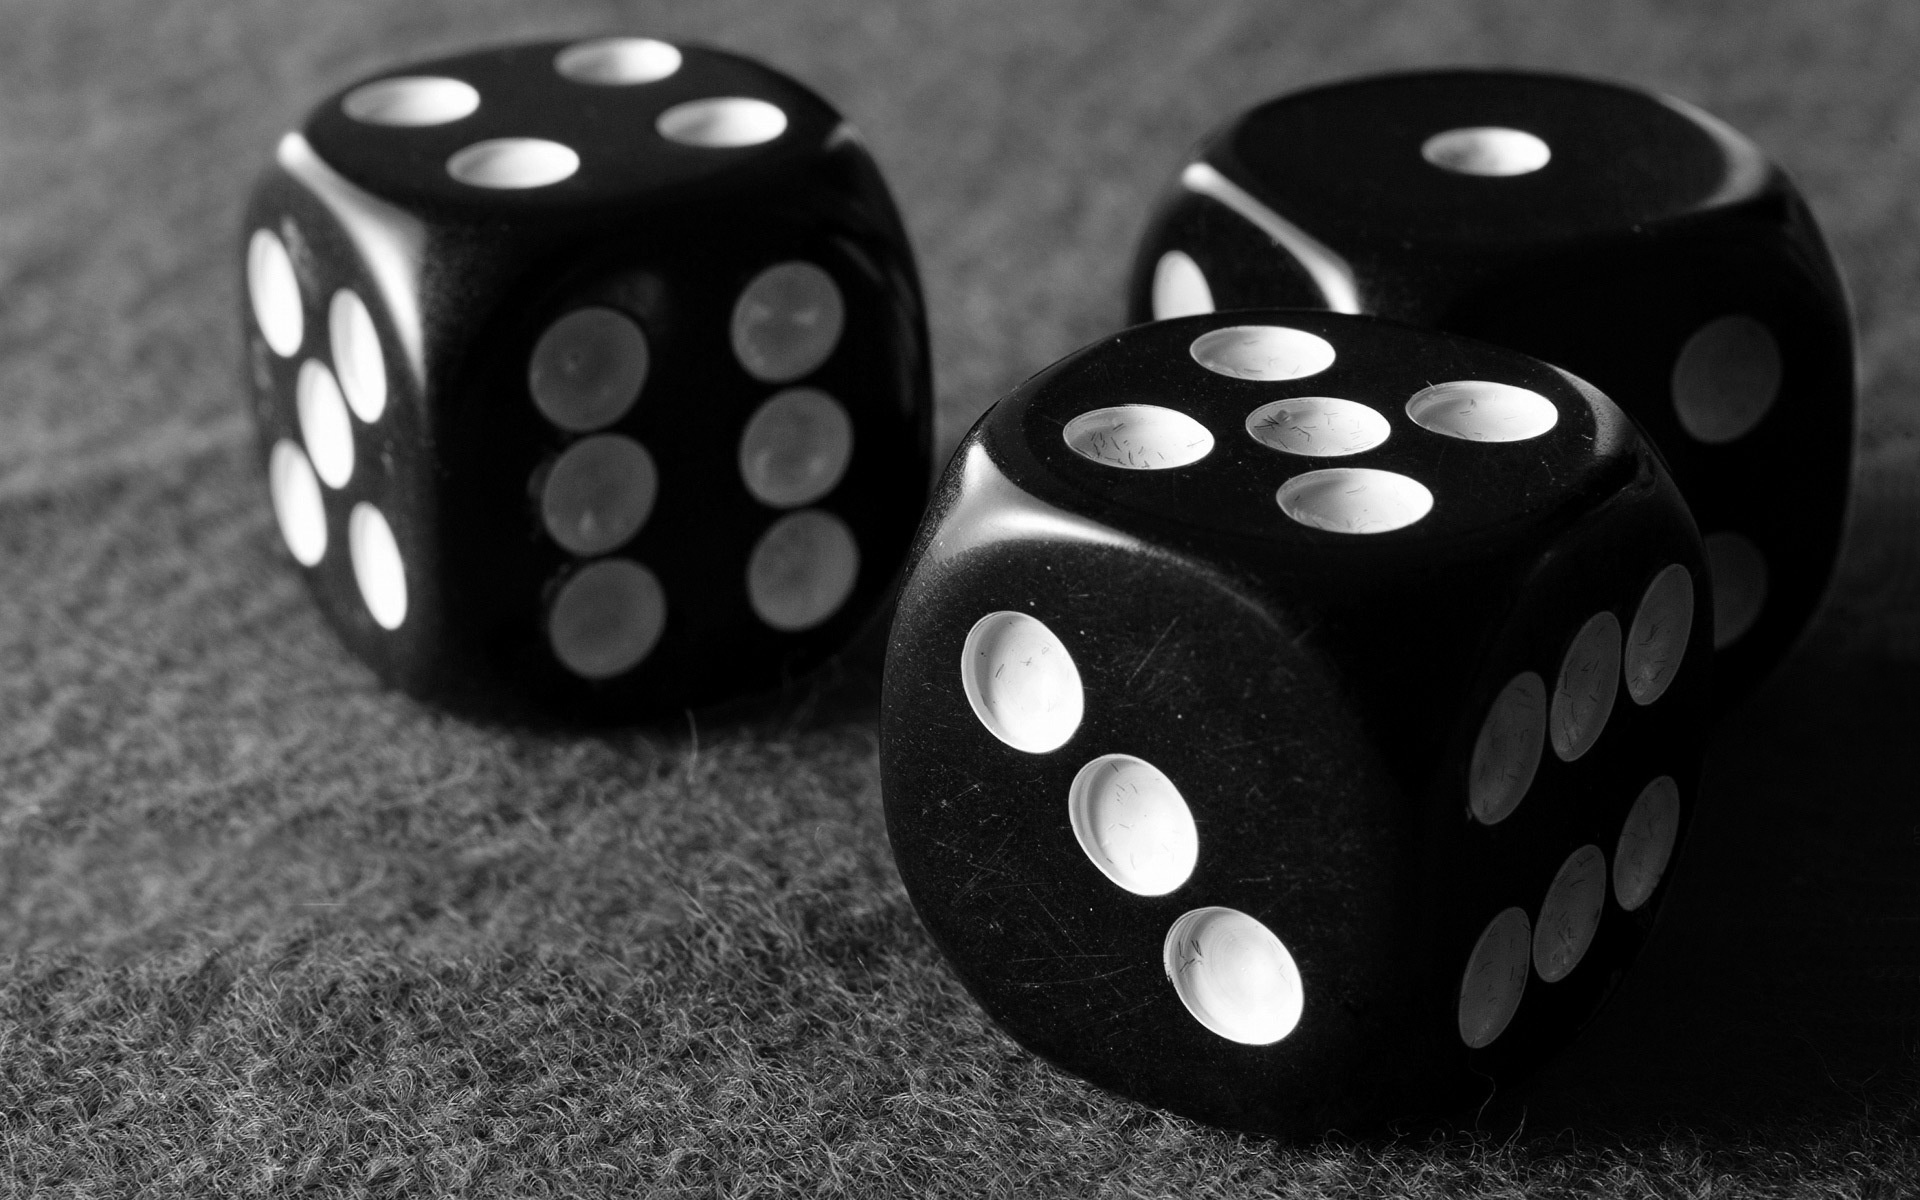 game, dice Image for desktop